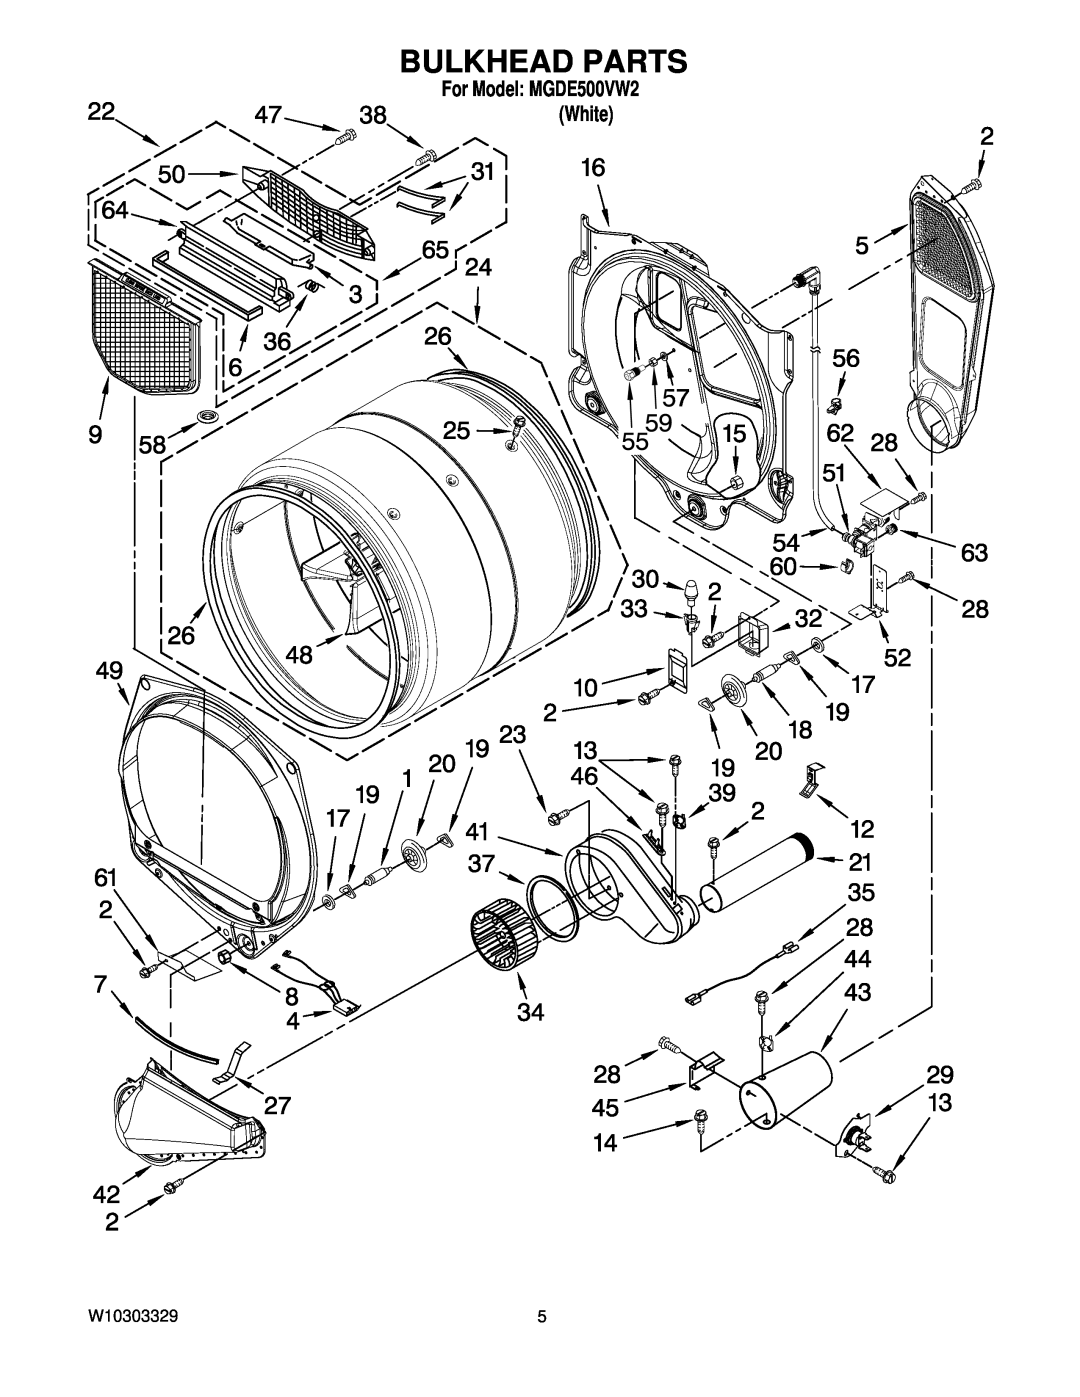 Maytag manual Bulkhead Parts, W10303329, For Model MGDE500VW2 White 